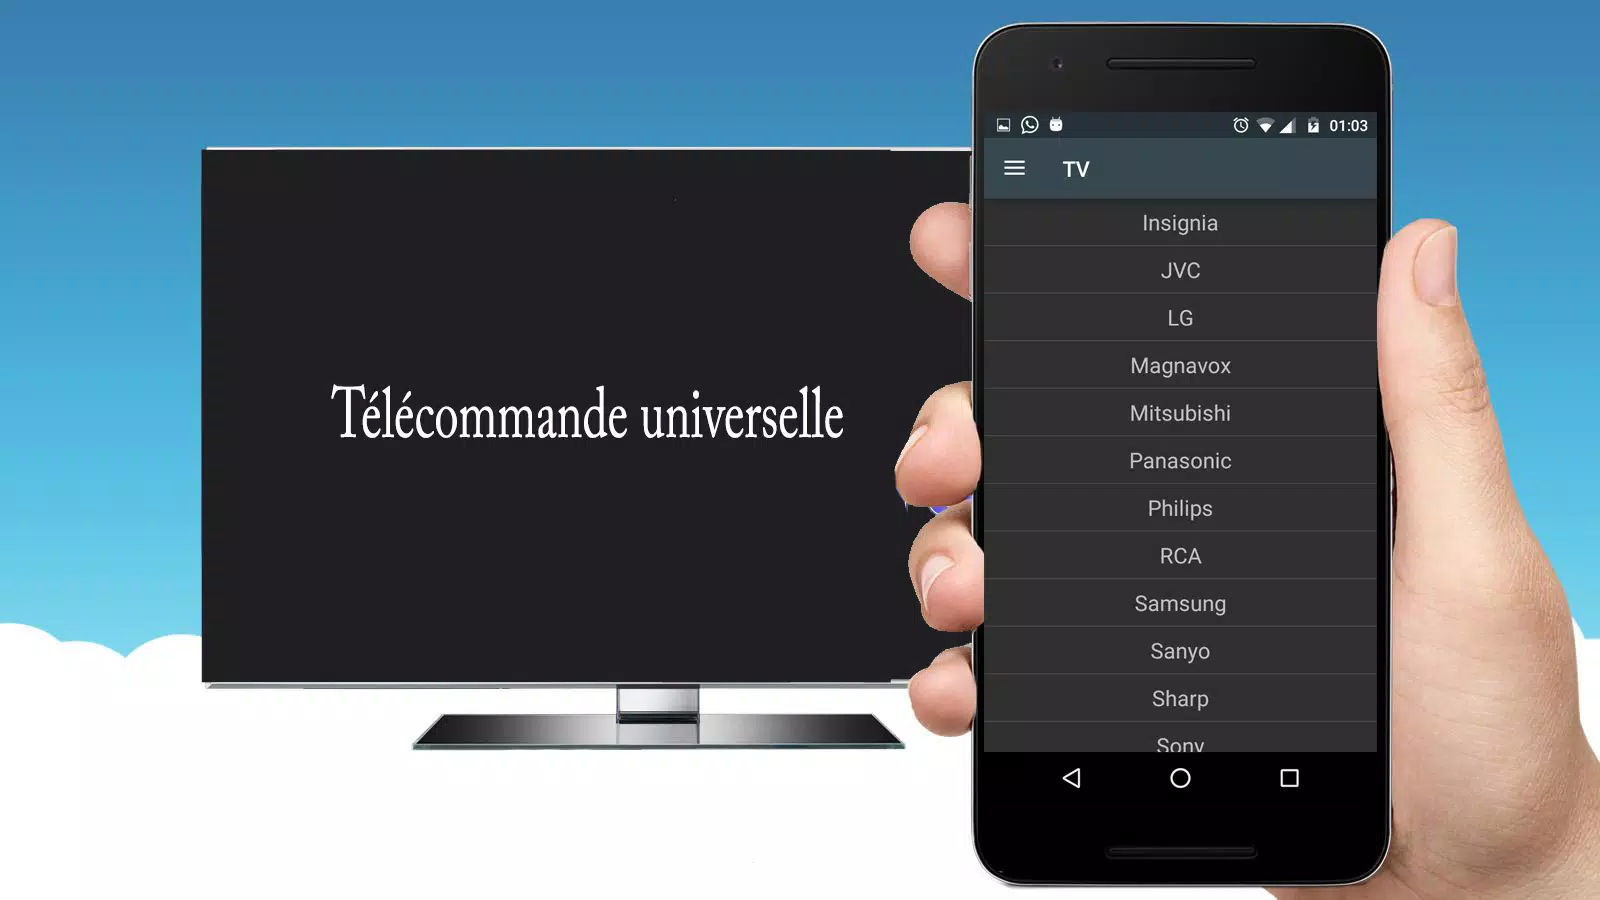 Télécommande universelle APK for Android Download